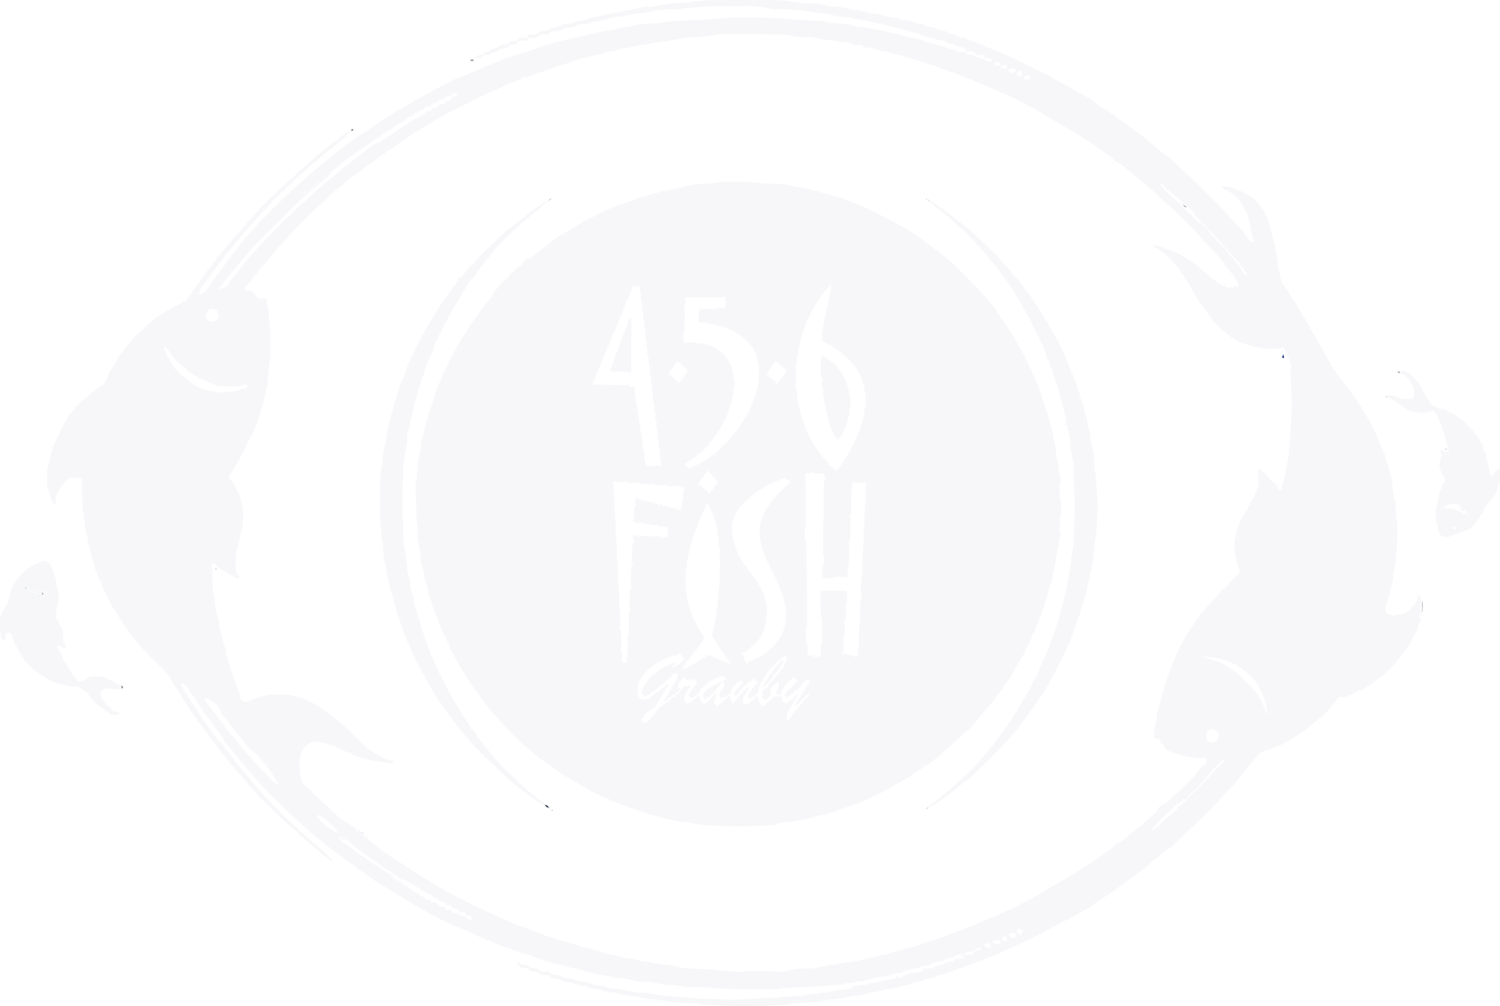 456 Fish